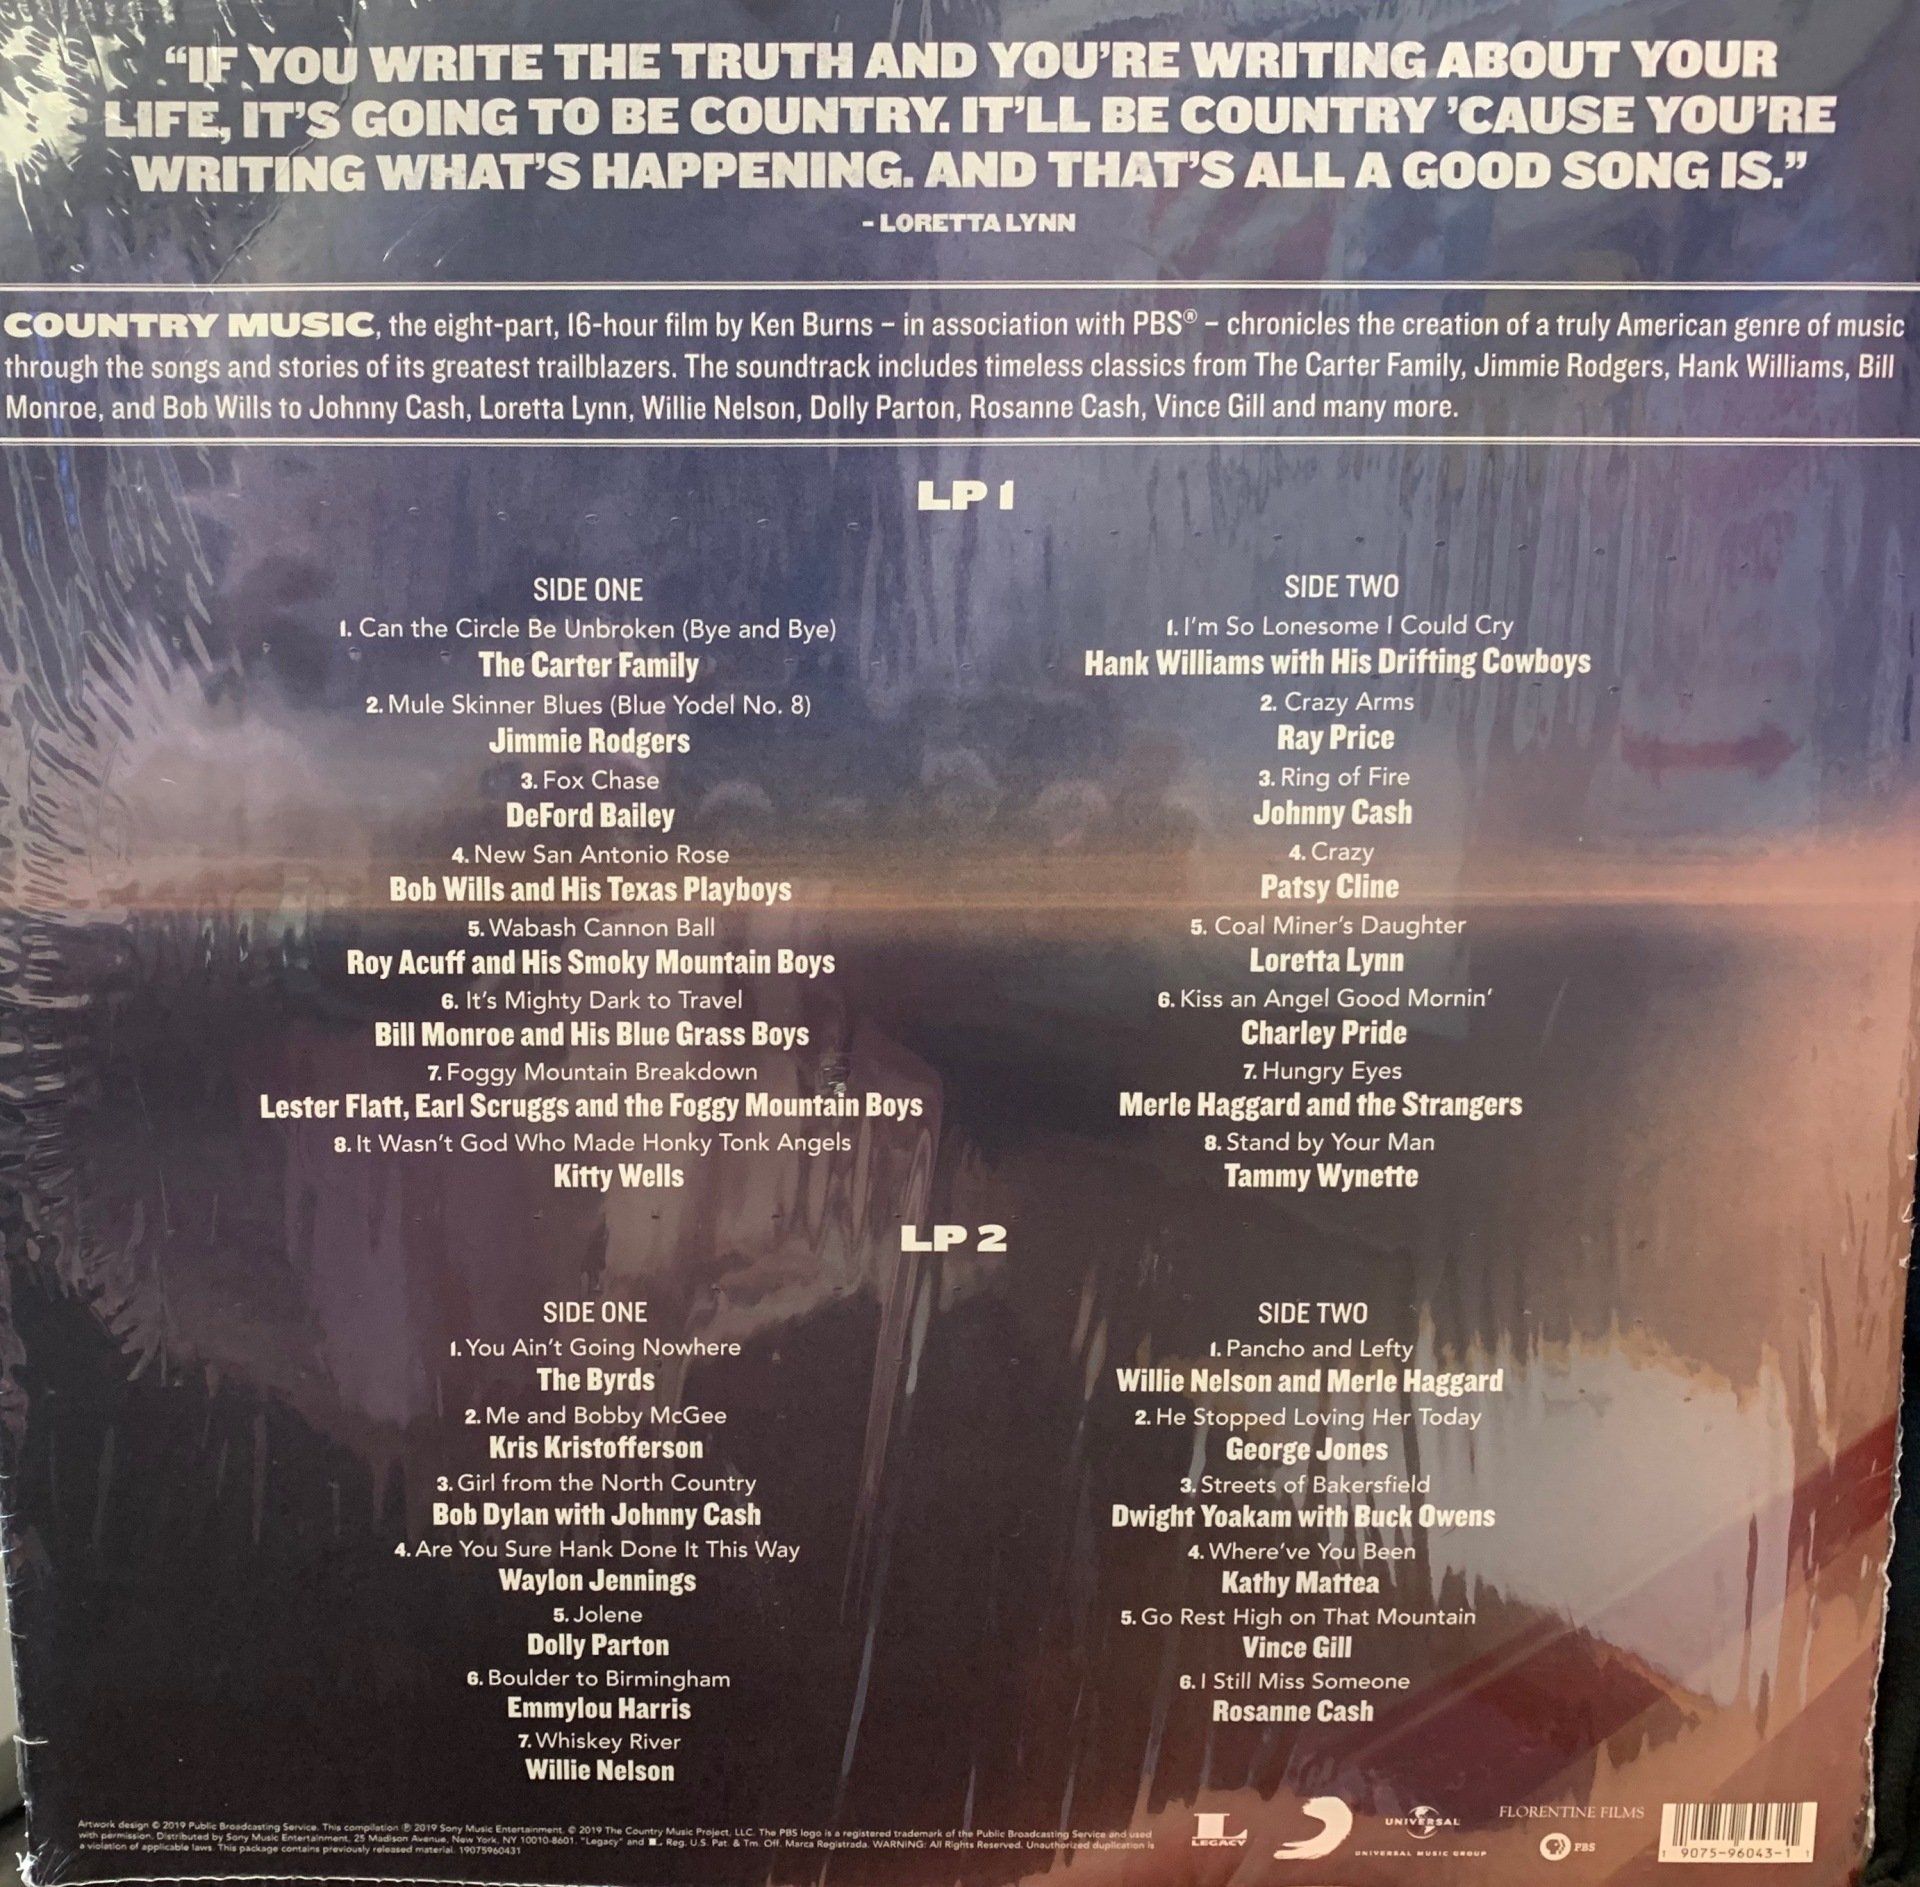 Double vinyl LP pressing. Original soundtrack to the Ken Burns documentary series.